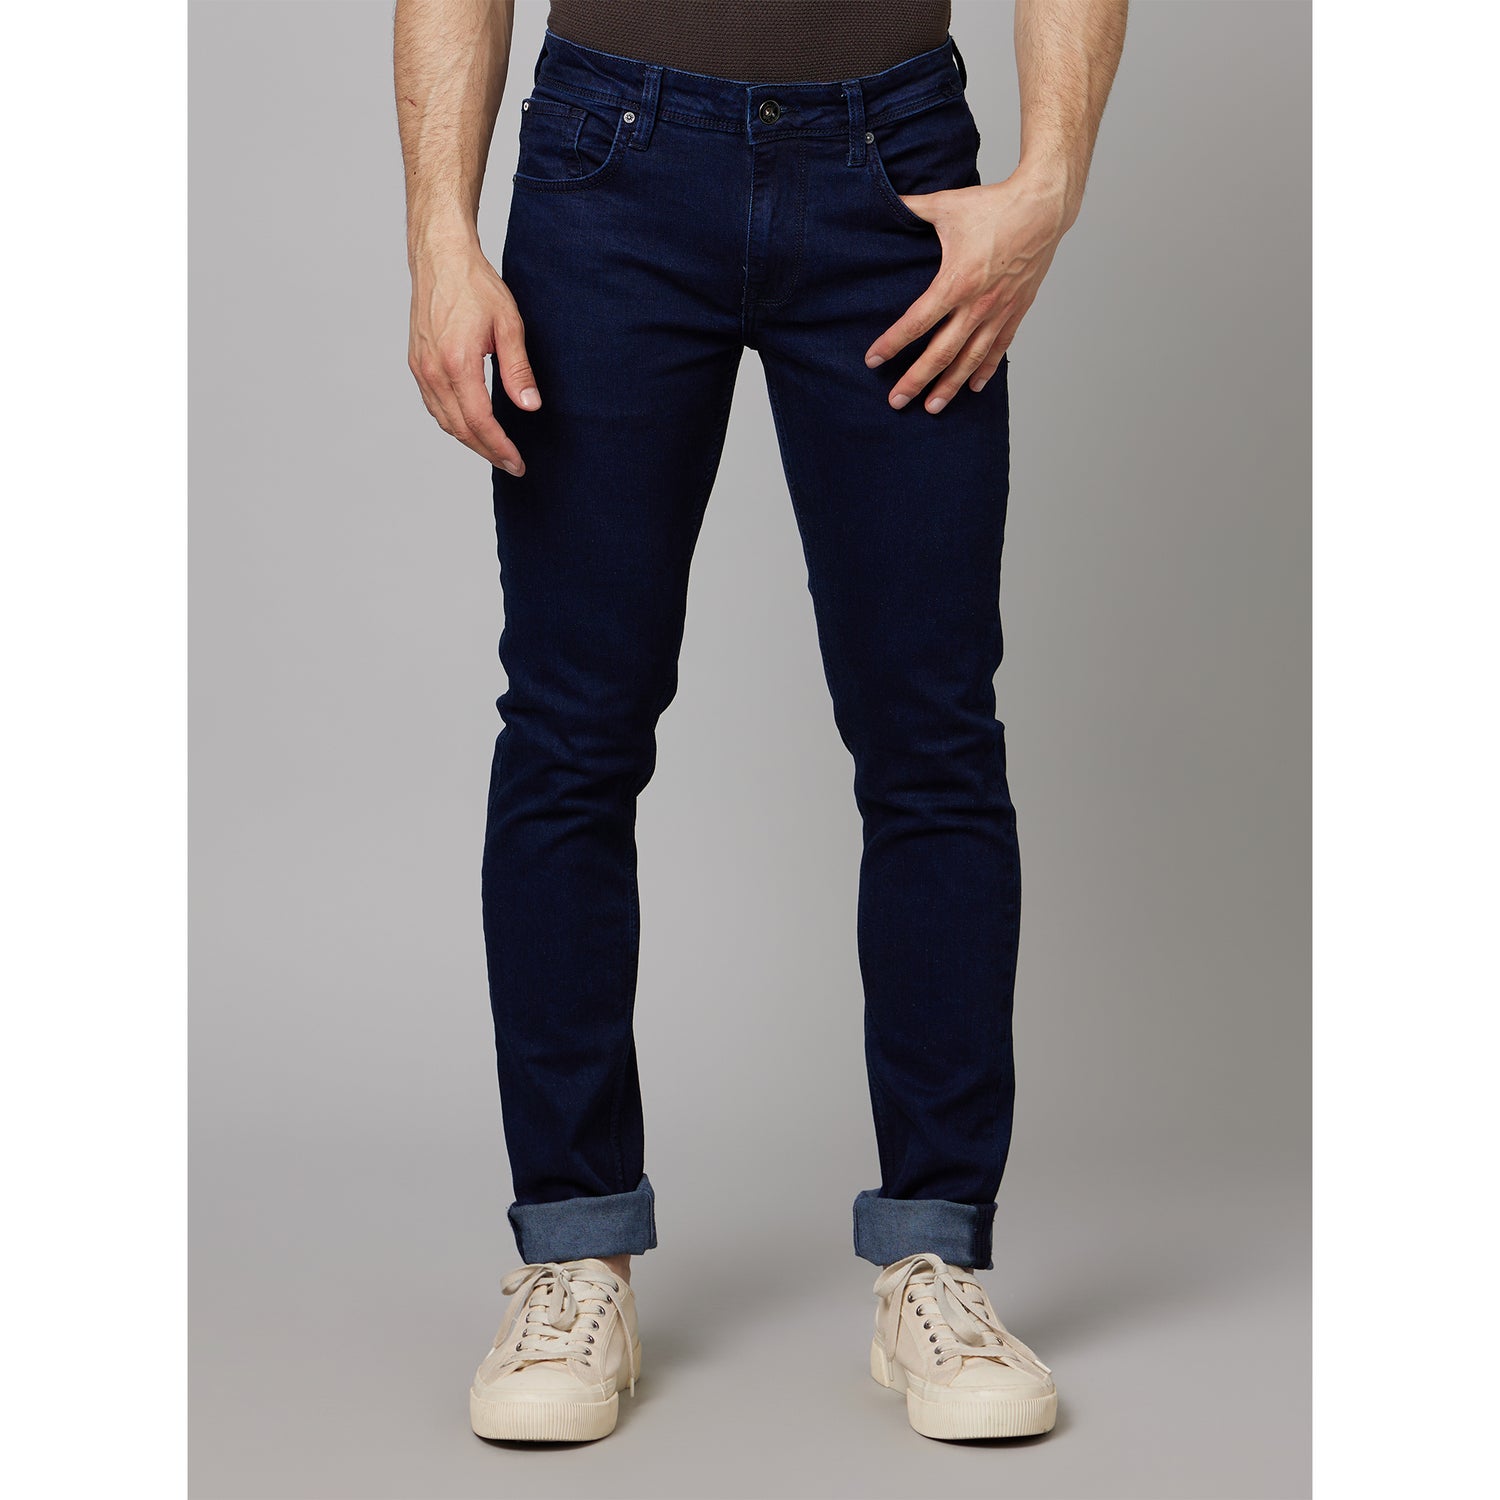 Navy Blue Mid-Rise Jean Slim Fit Jeans (COECODARK125)